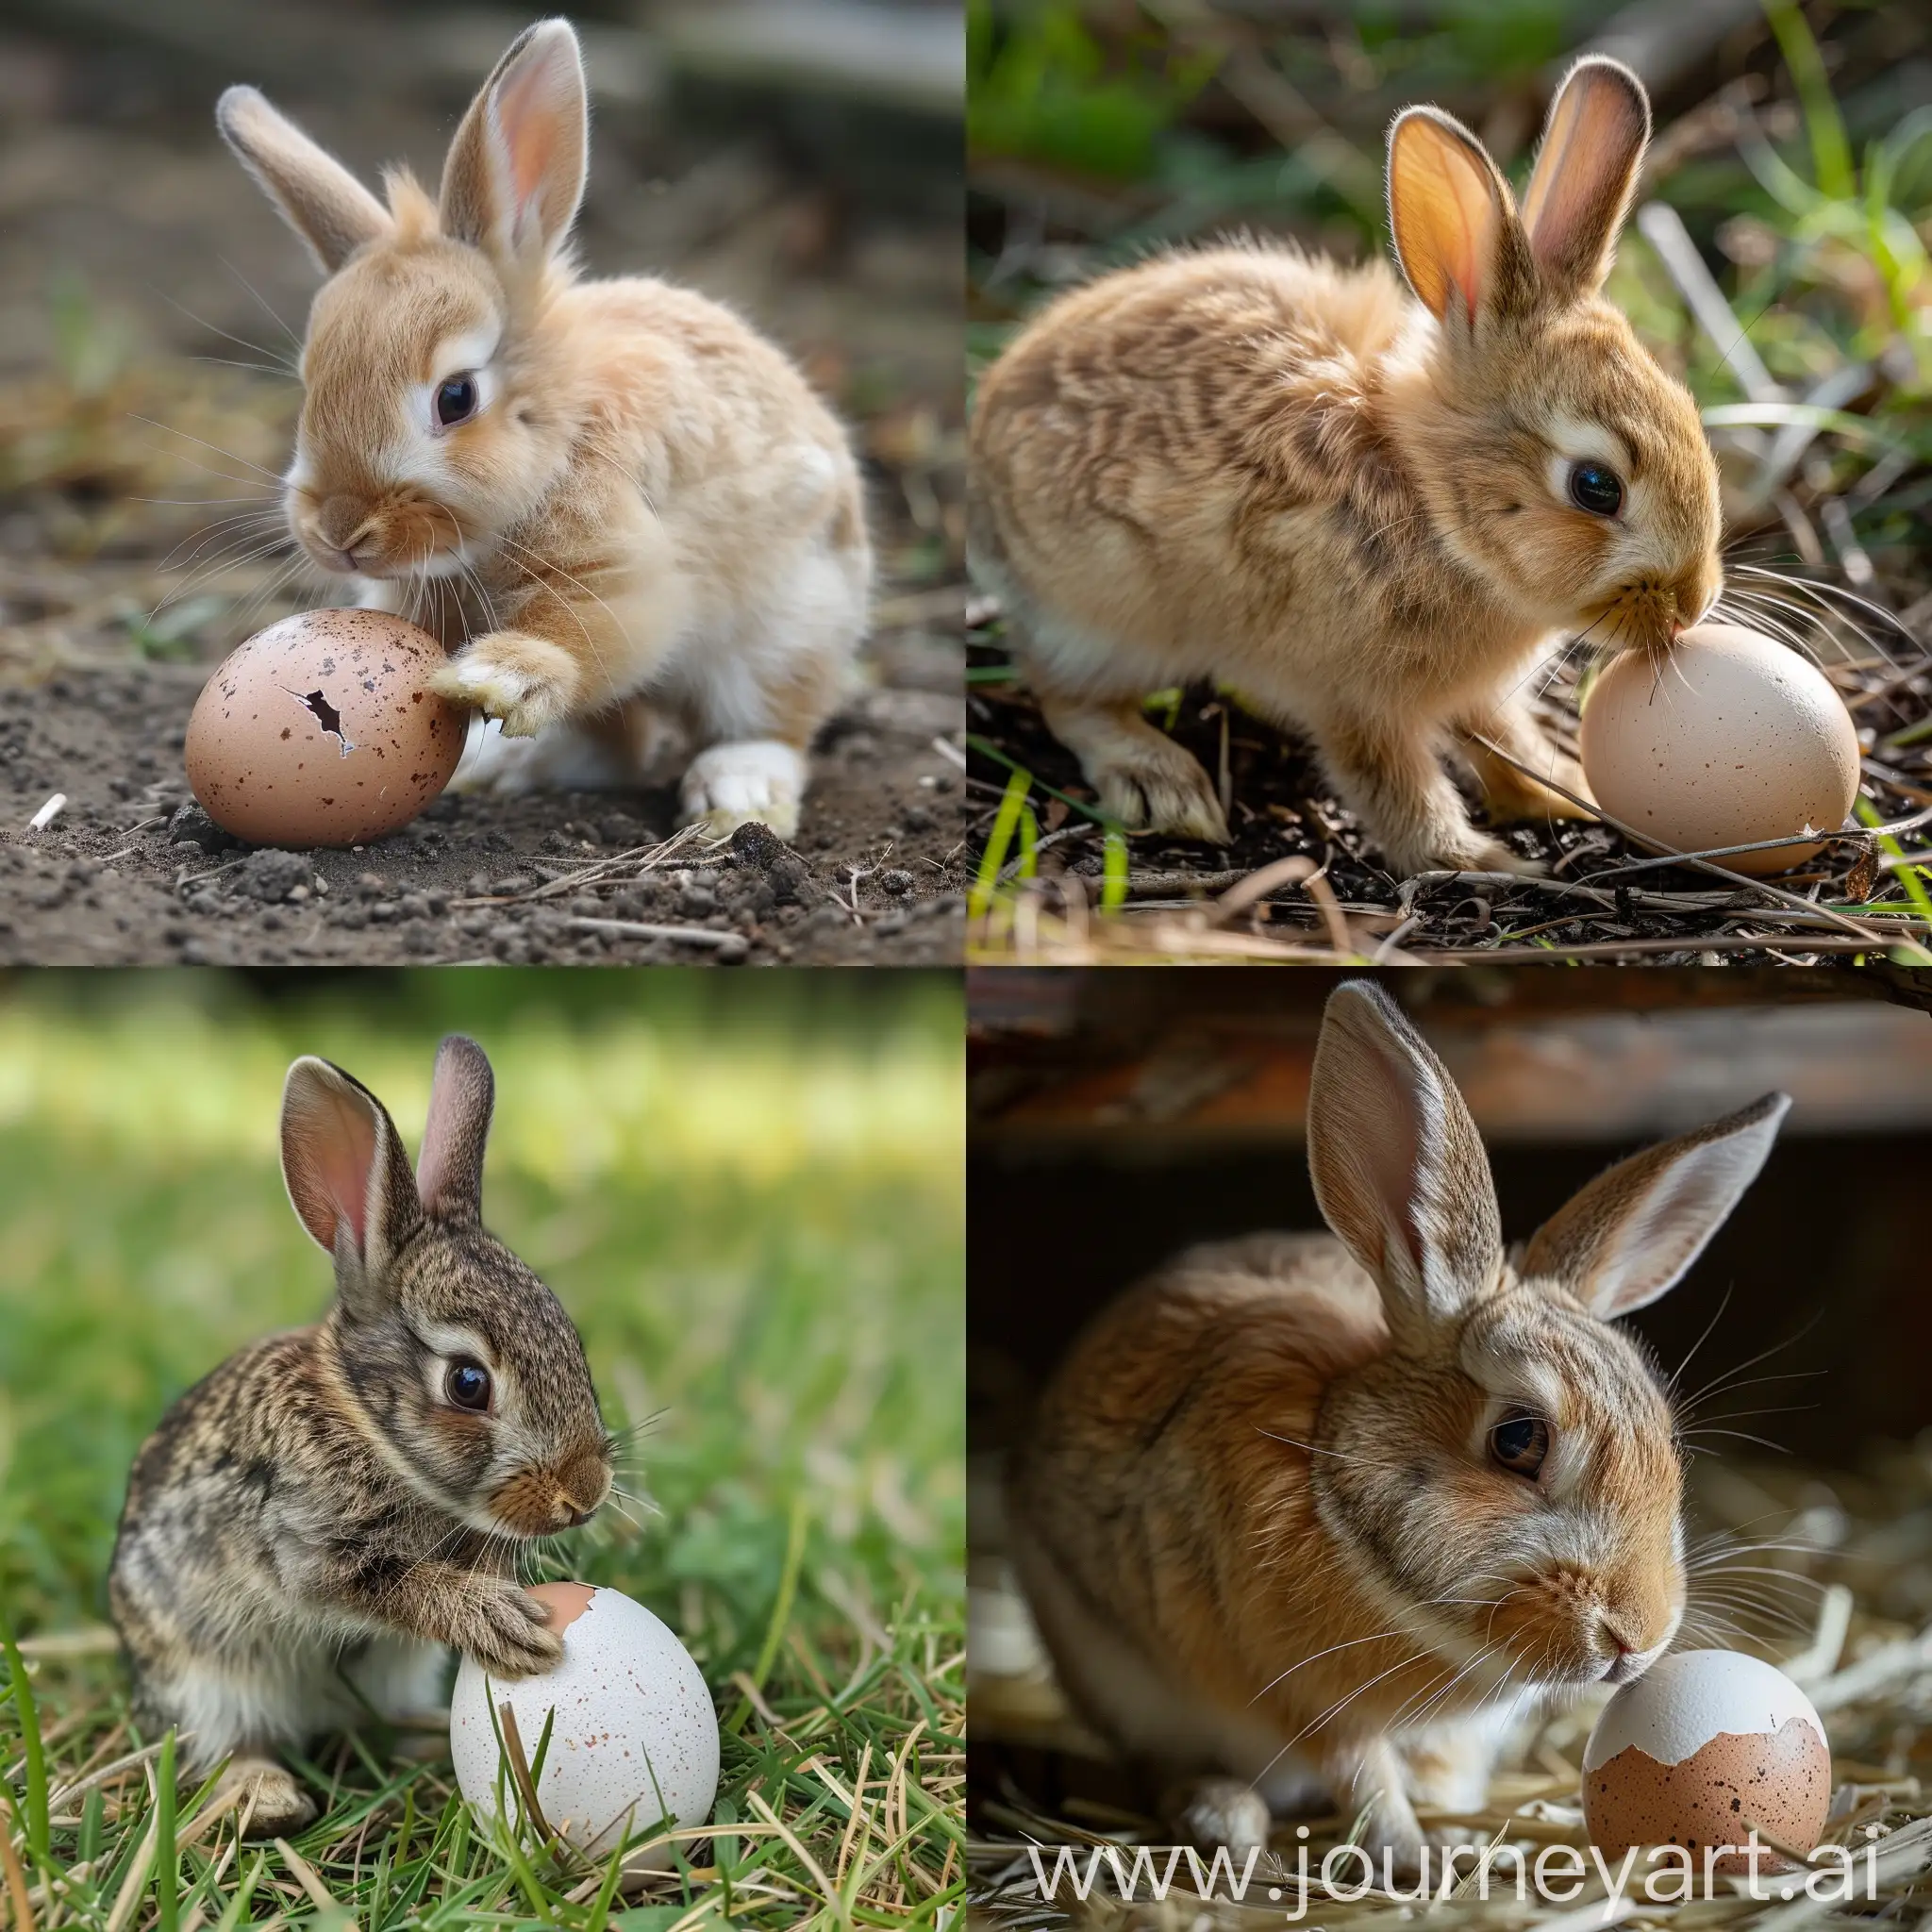 Playful-Rabbit-Scratching-Its-Egg